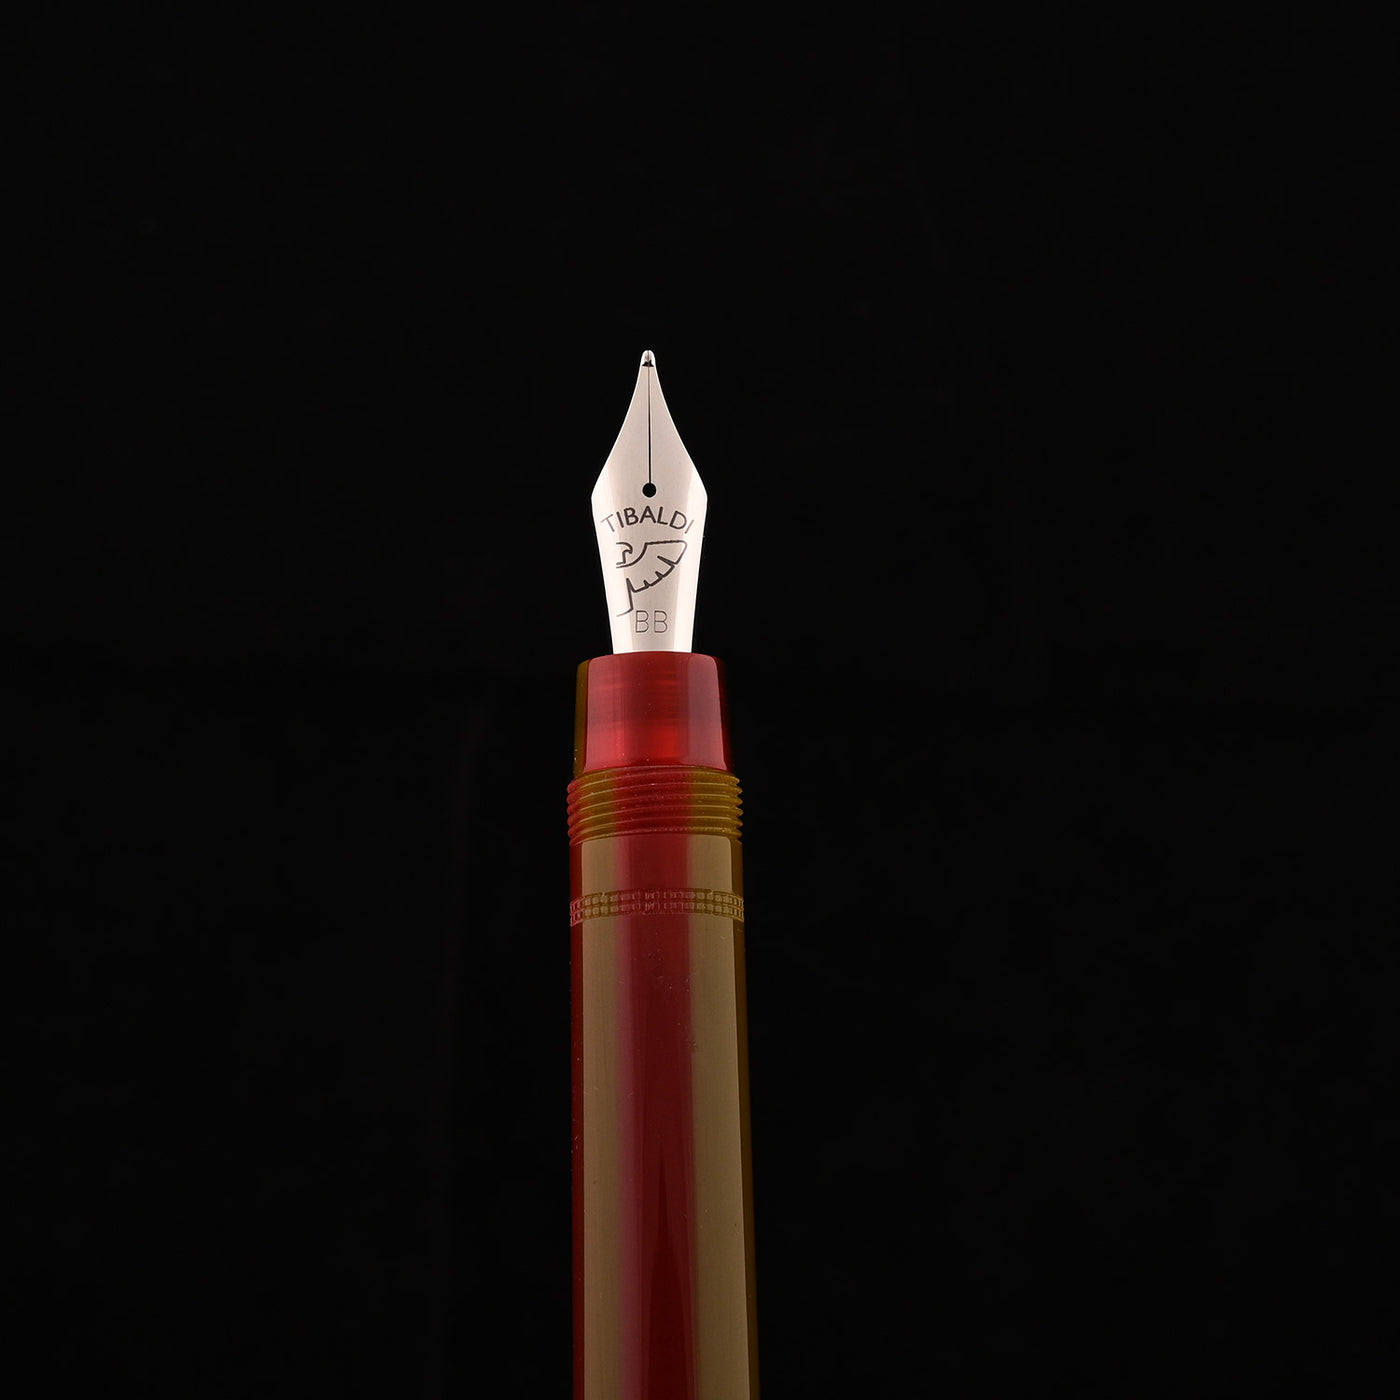 Tibaldi Perfecta Fountain Pen - Baiadera Red 10